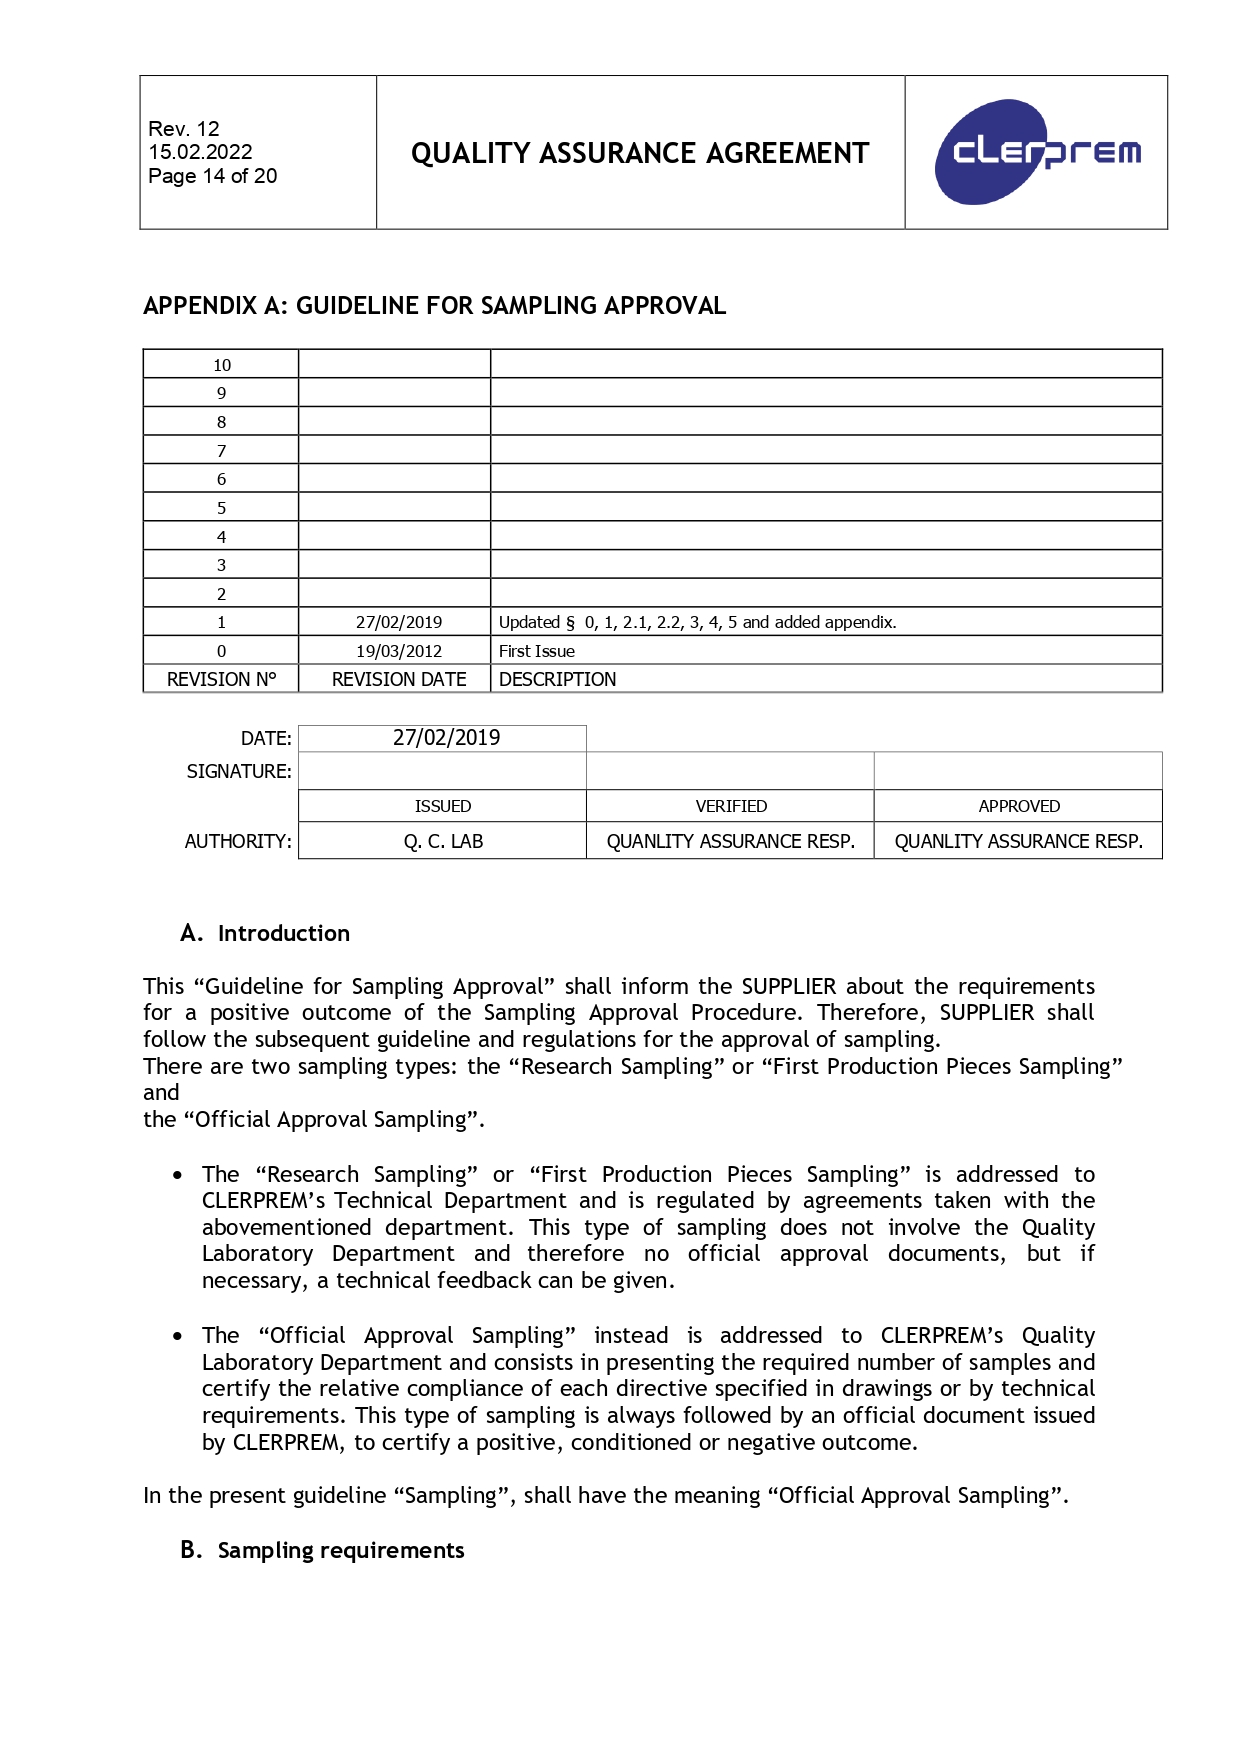 Quality Assurance Agreement Clerprem SpA Rev 13_page-0014